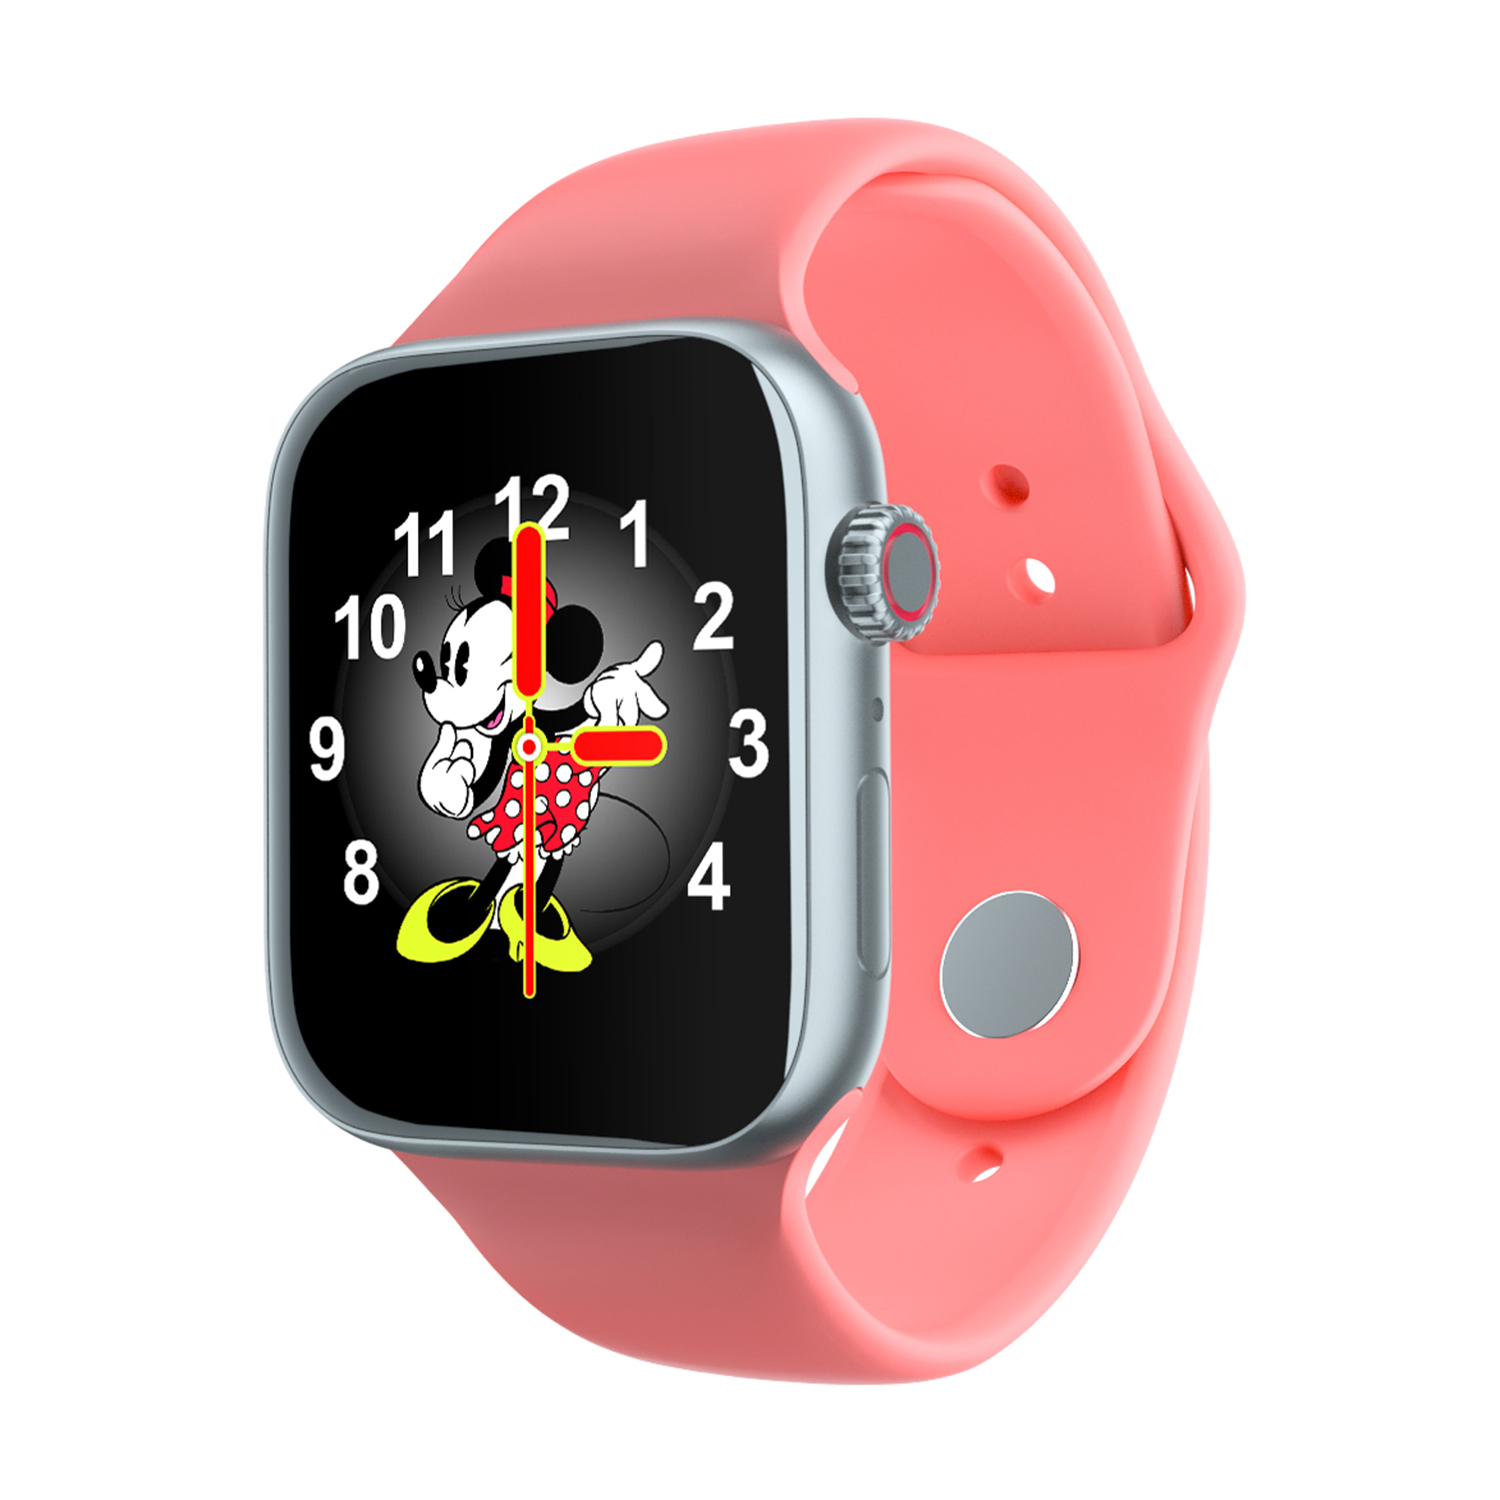 Z15 Smartwatch Bluetooth Men's watches Fitness bracelet Heart Rate Blood Pressure Smart watches women pk Z13 Z3 Z6 Z6S | Shopee Malaysia